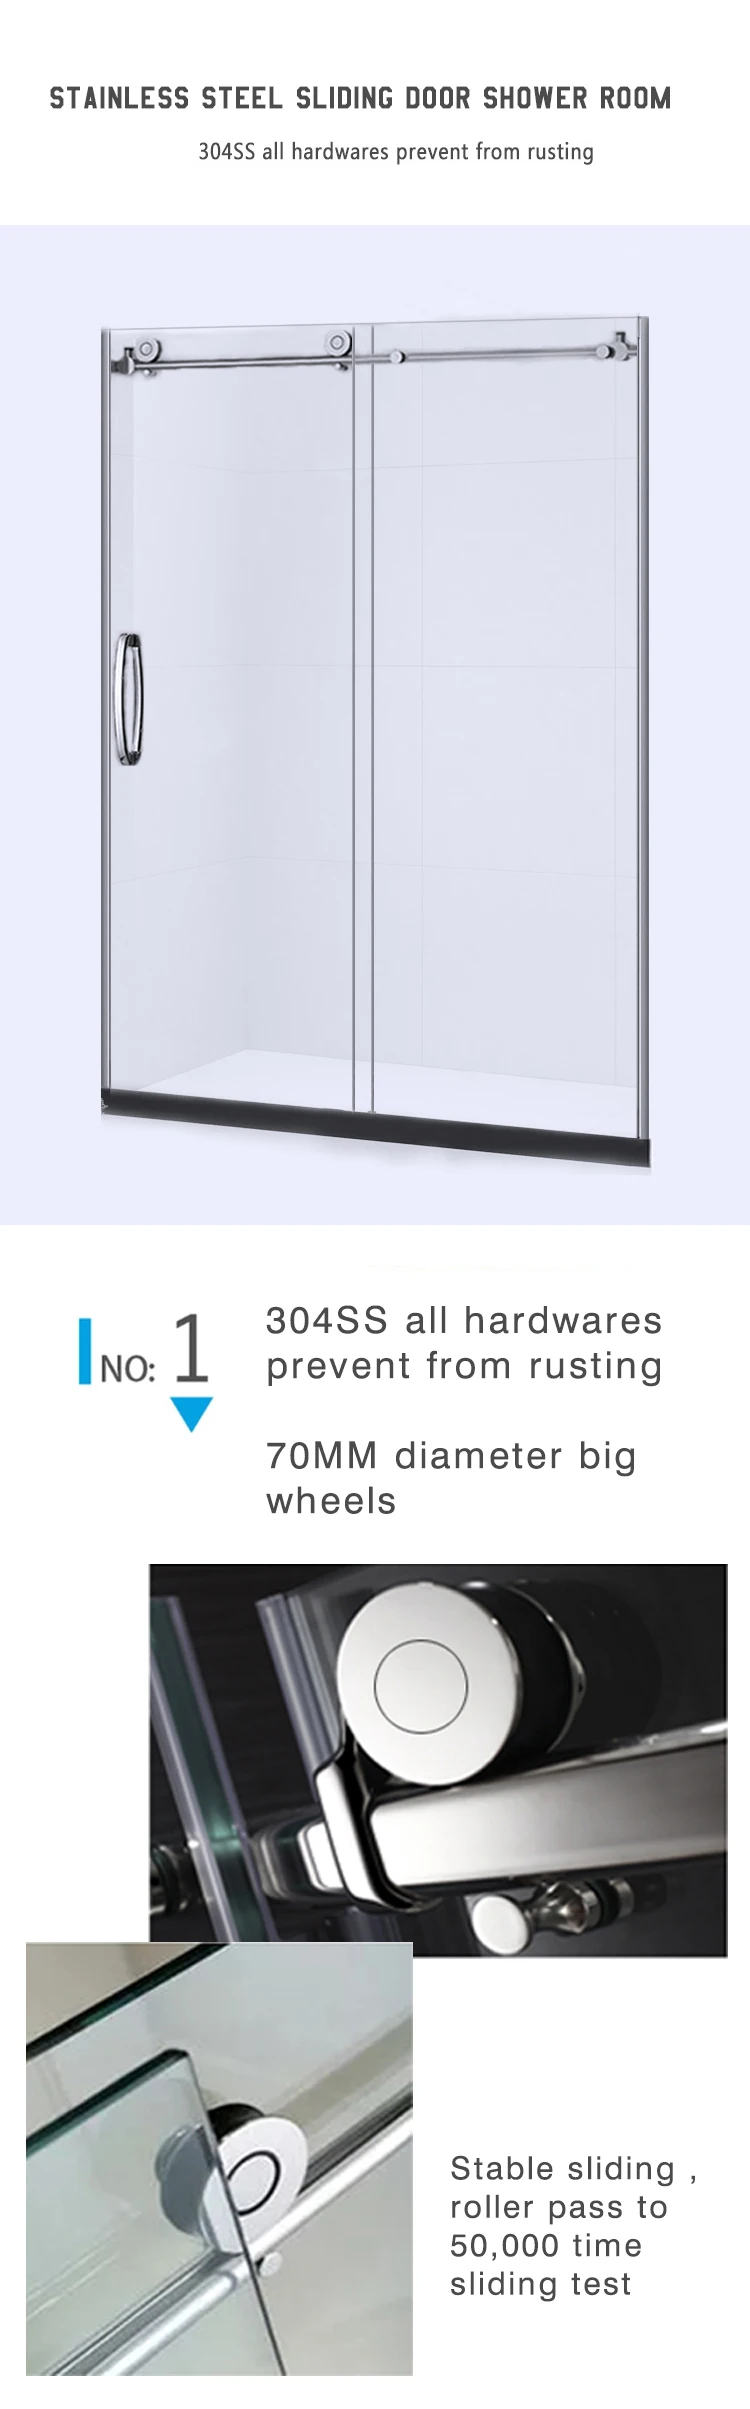 KEZE clean frameless  Hardware  sliding door rollers tempered glass shower door for bathroom